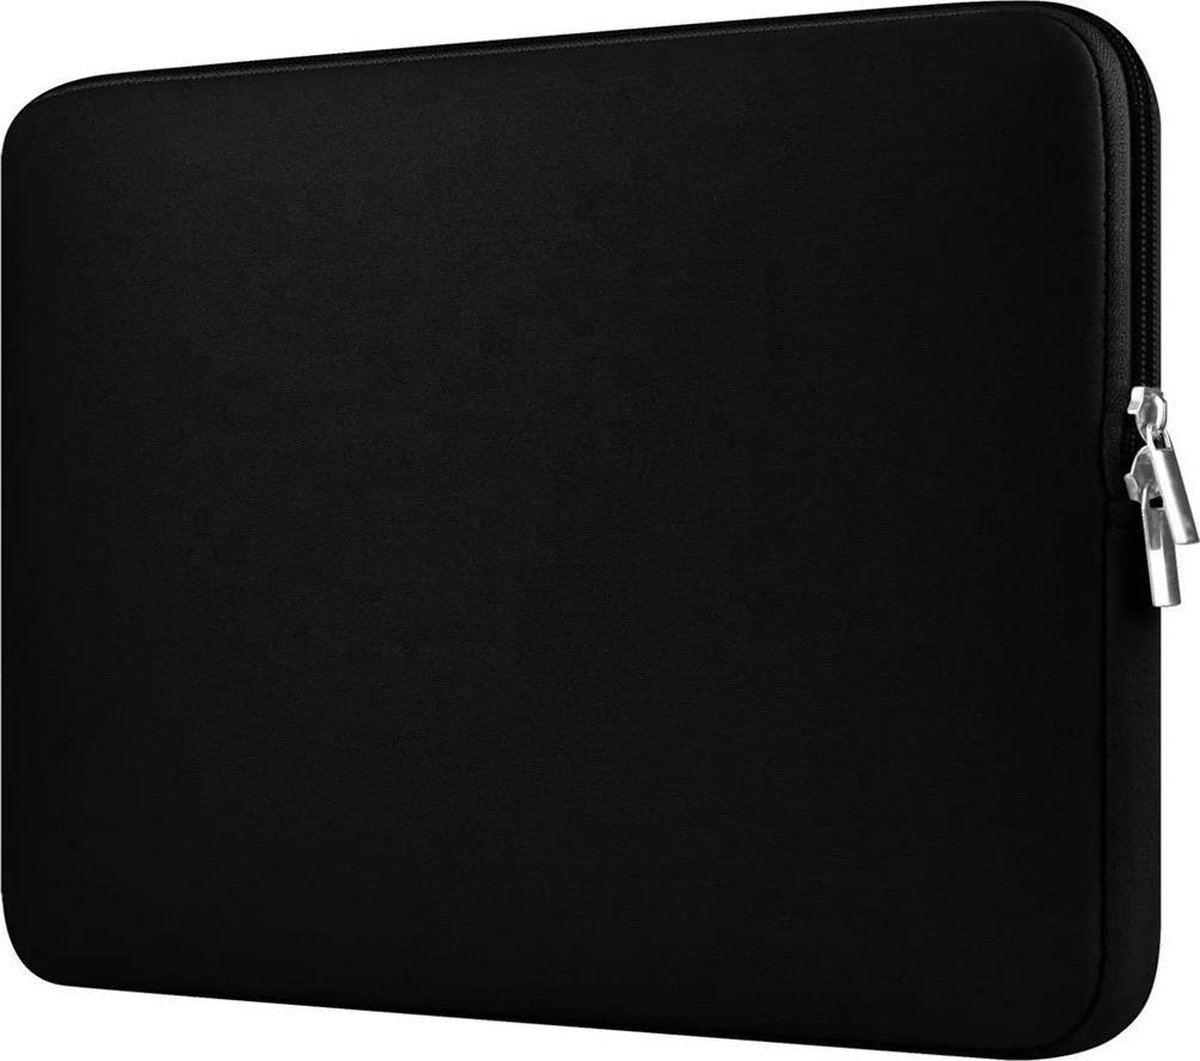 Handige universele laptophoes – case – sleeve – 15,6 inch – zwarte kleur - Schokproof